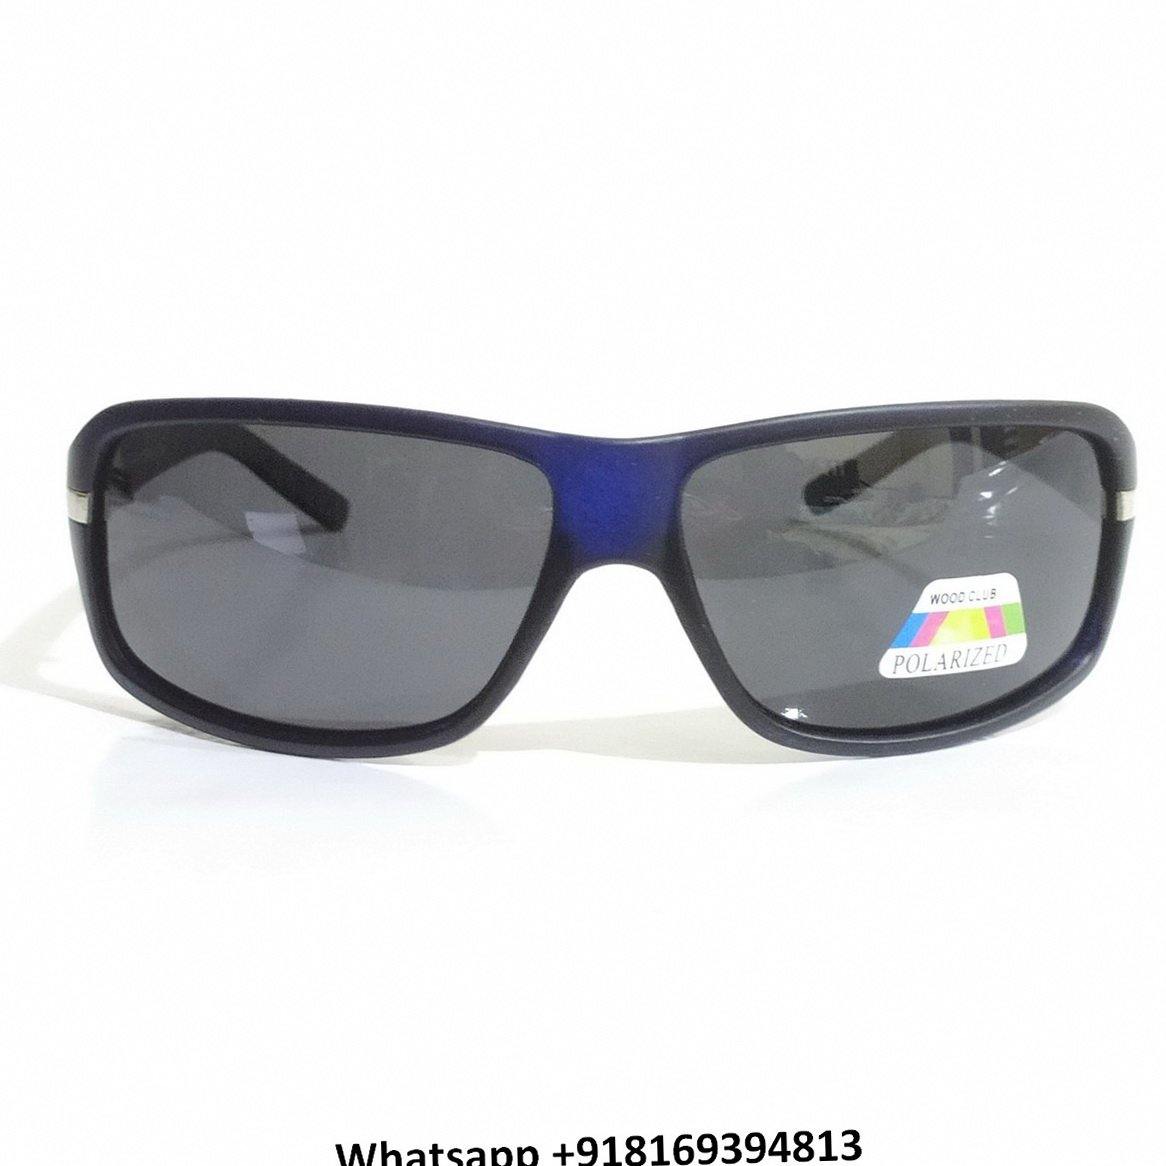 Wraparound Sports Polarized Sunglasses for Men and Women 10067BL - Glasses India Online